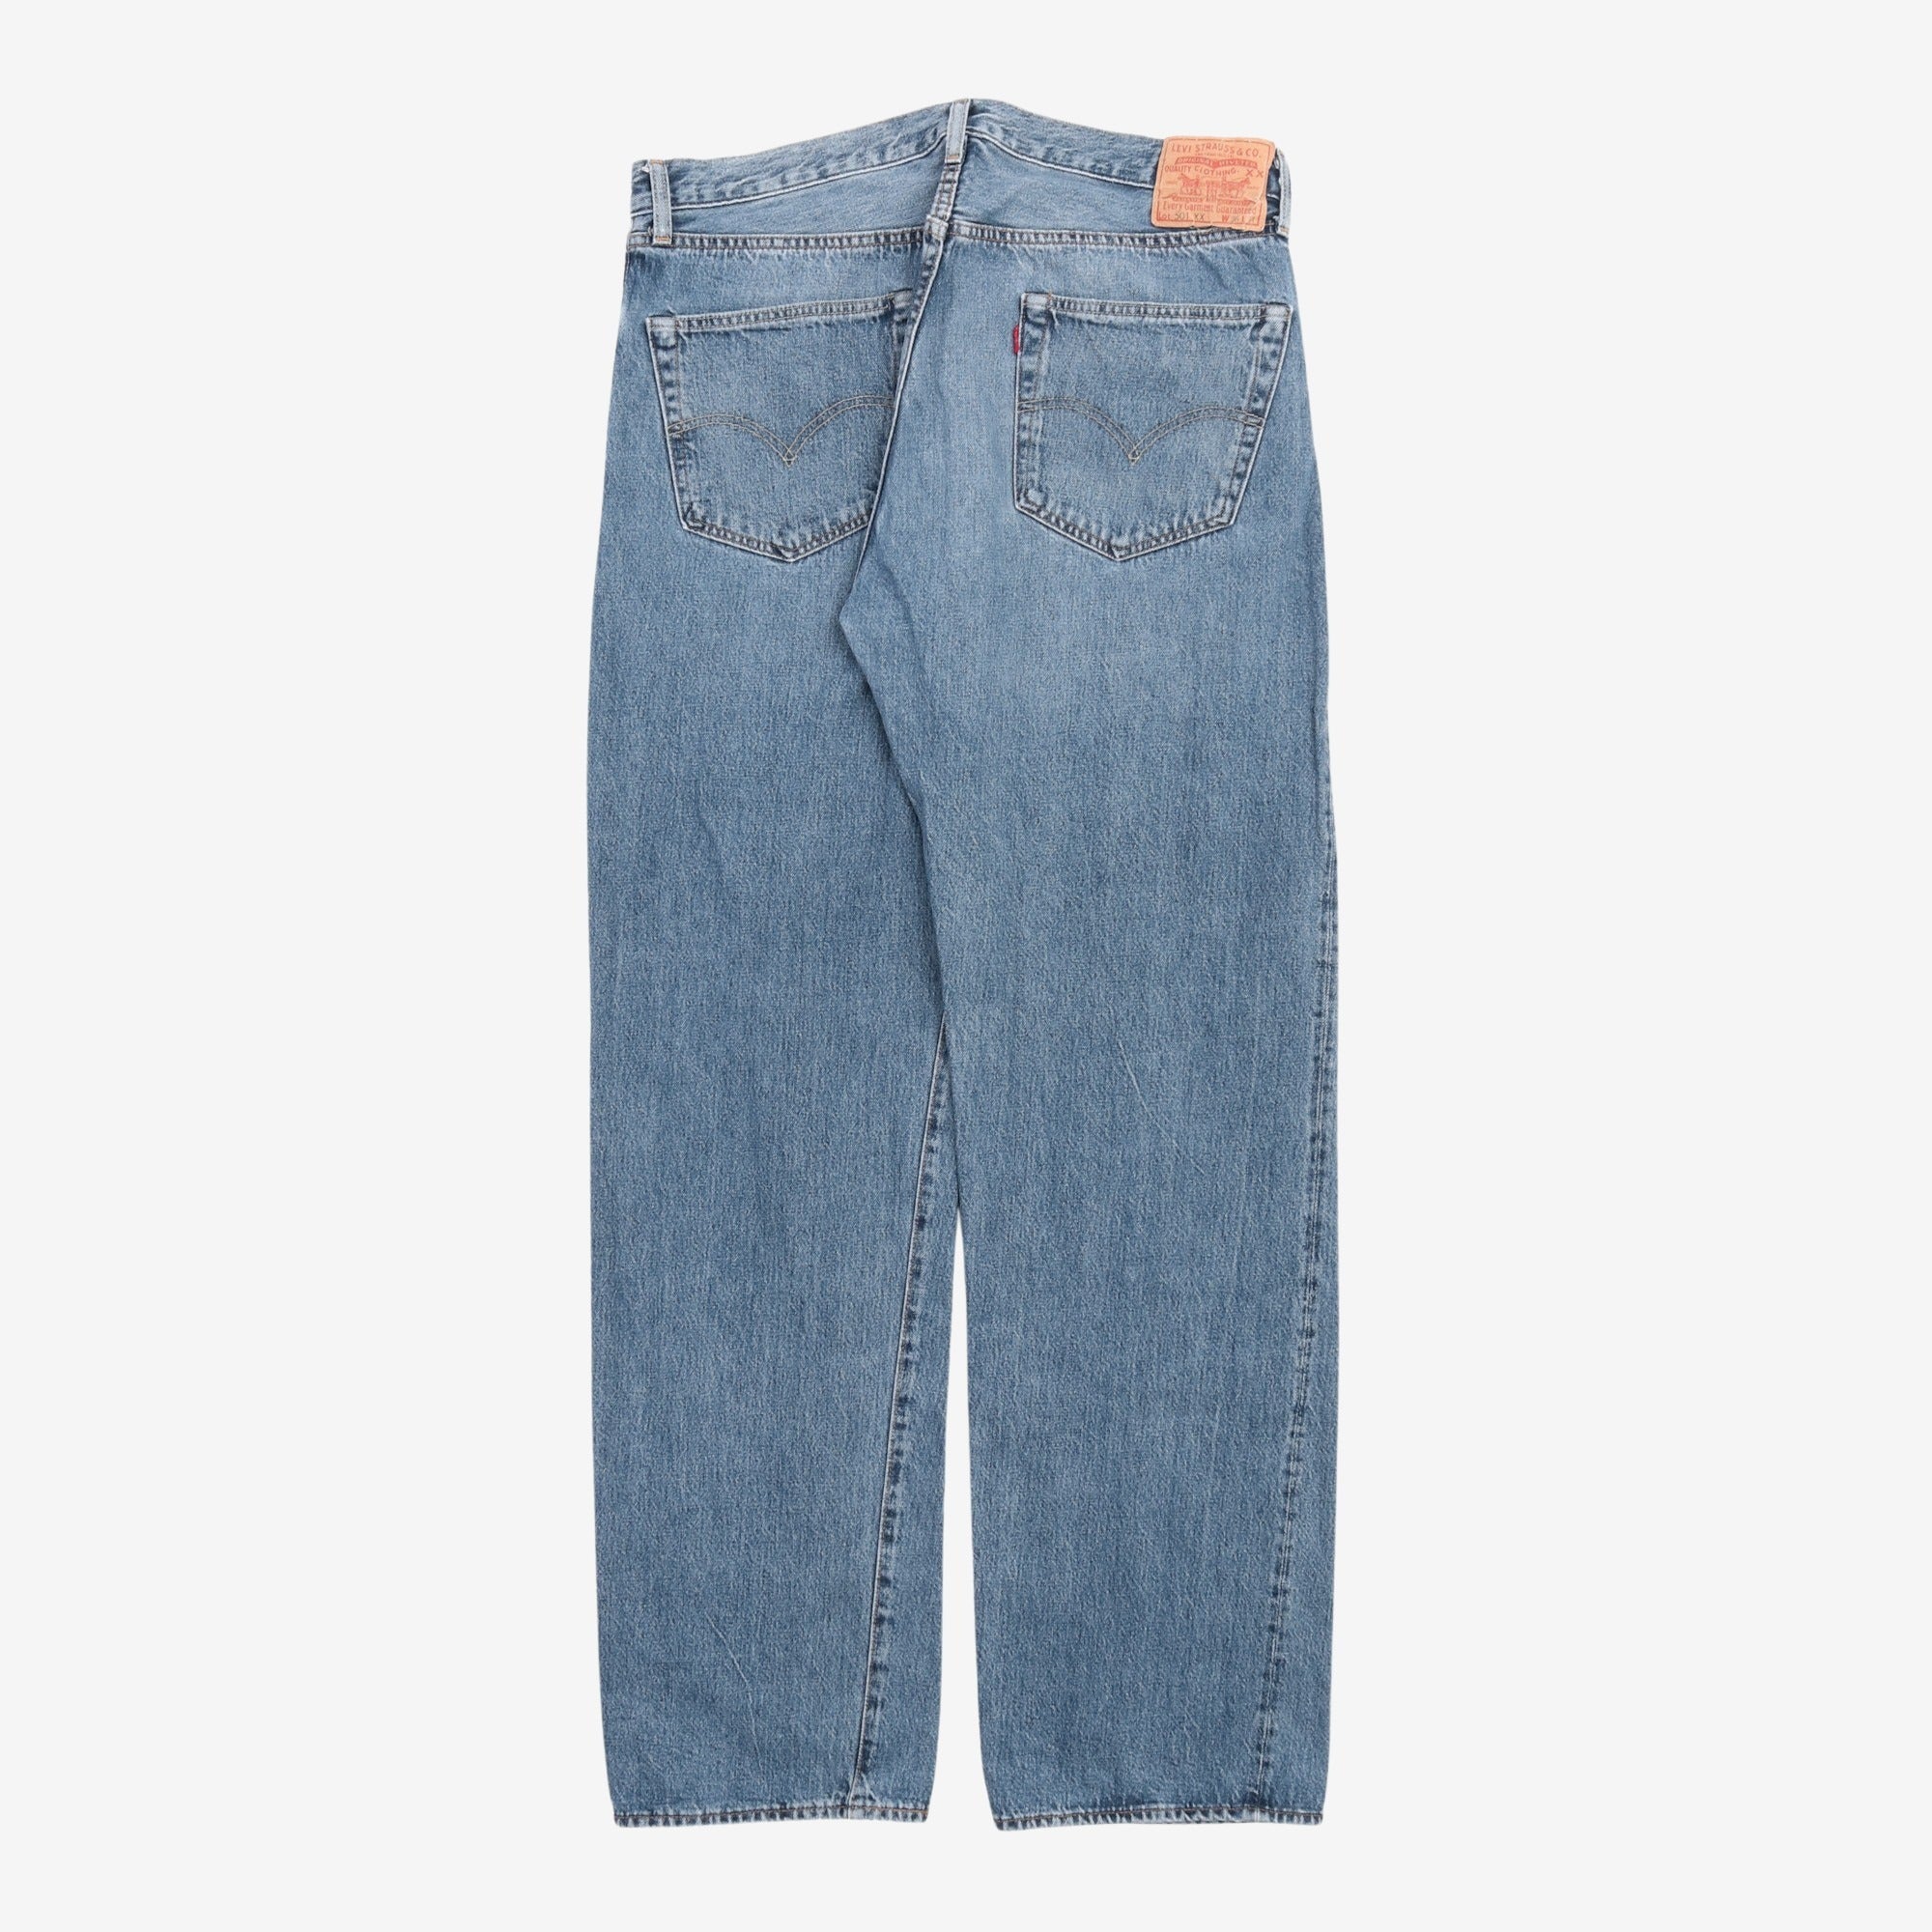 LVC 501 Jeans